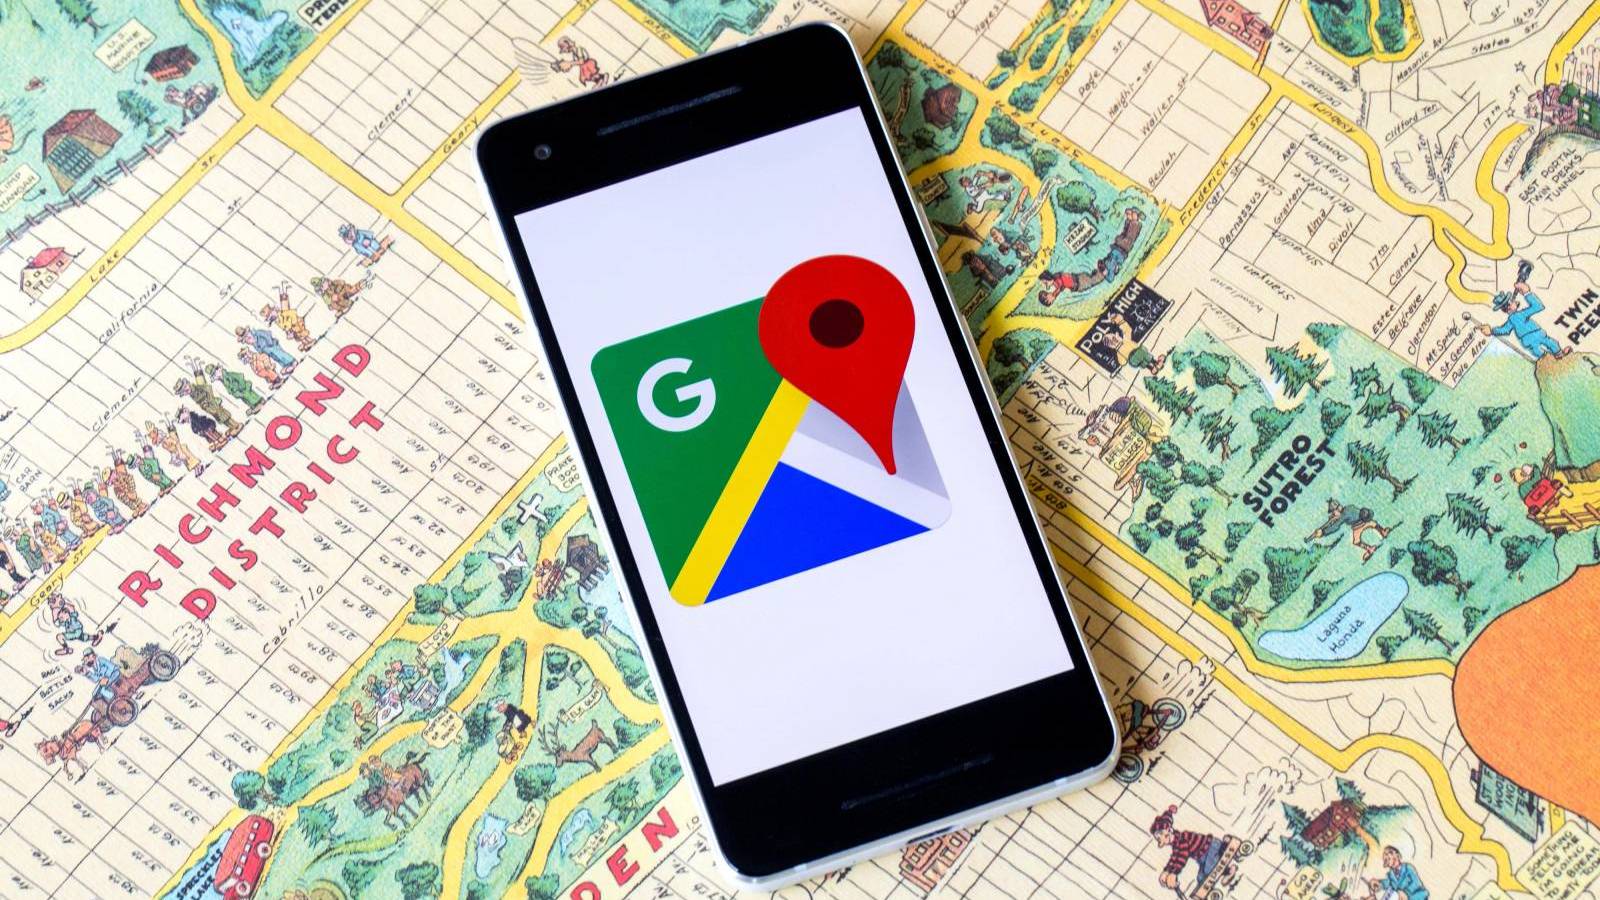 Google Maps Si-a Actualizat Aplicatia pentru Telefoane, ce Noutati Ofera